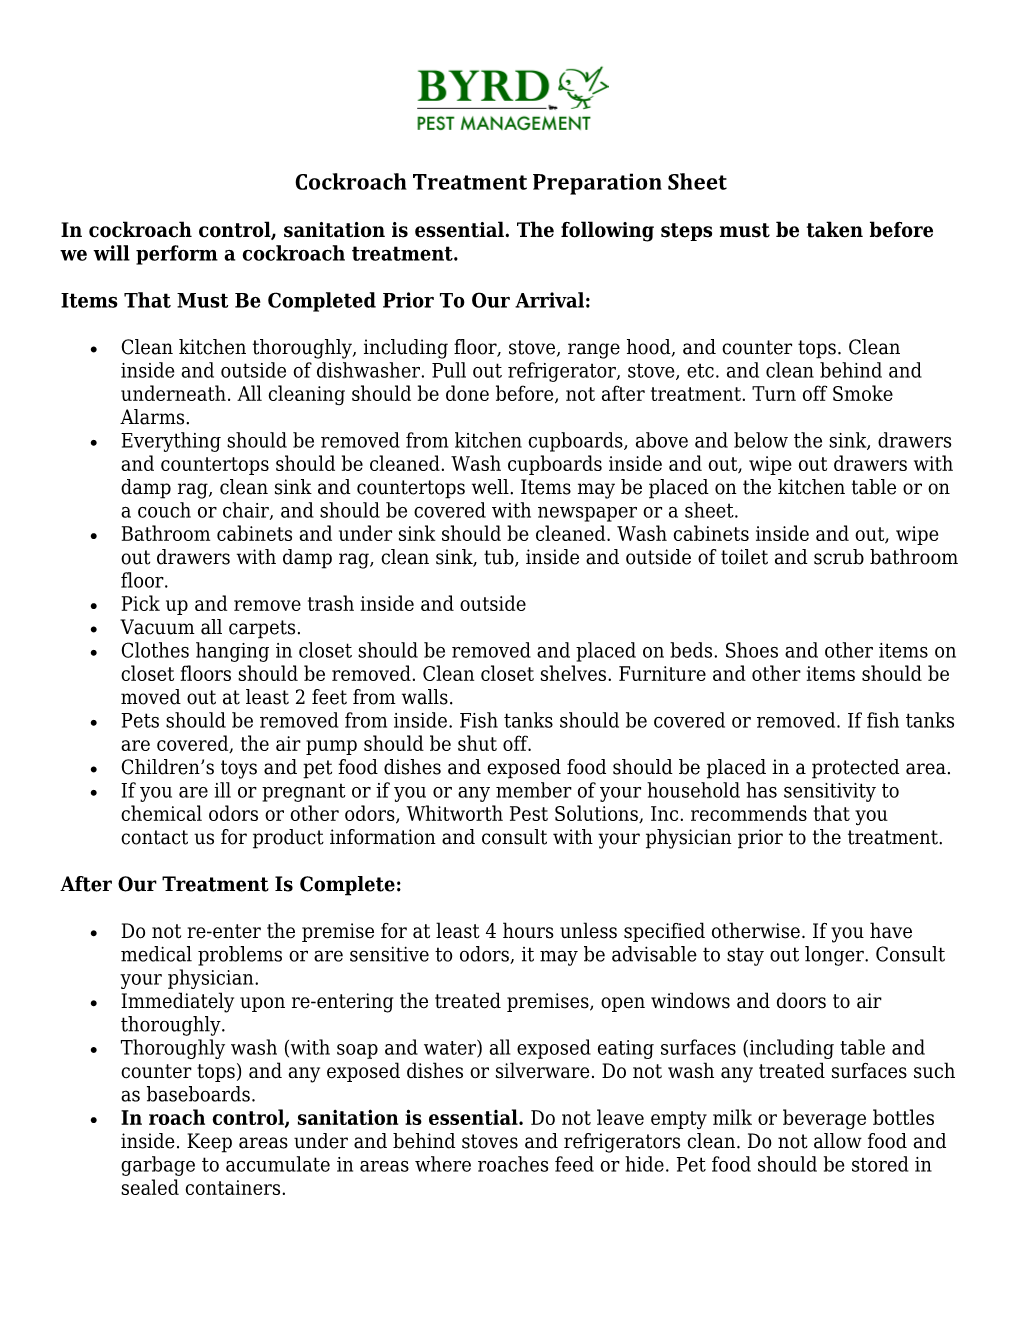 Cockroach Treatment Preparation Sheet